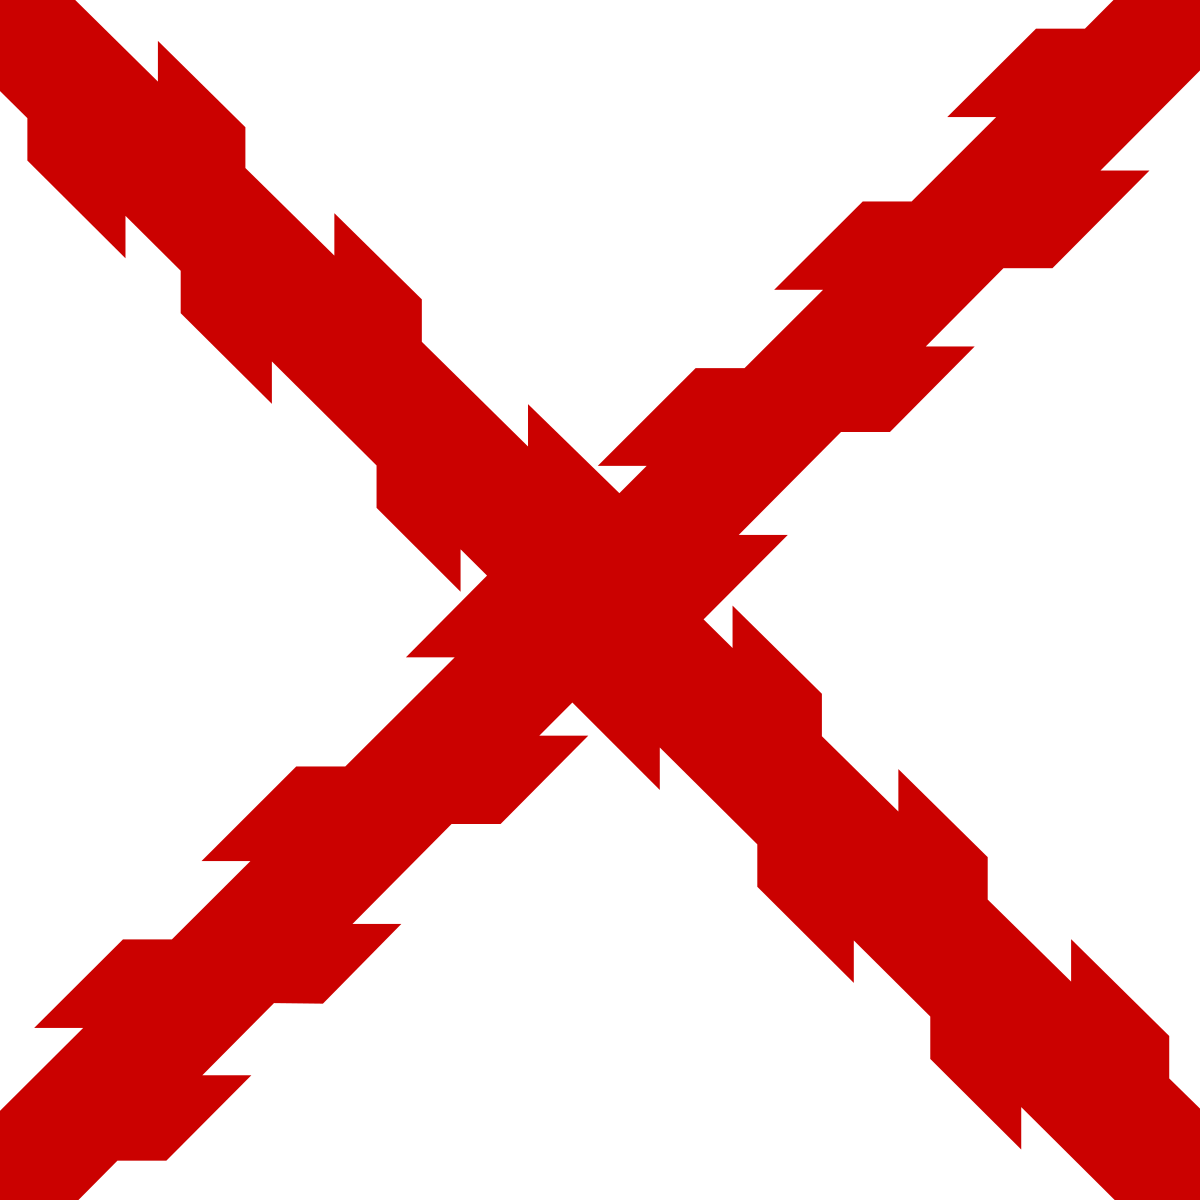 Cross Of Burgundy Wikipedia - roblox galleons v62b